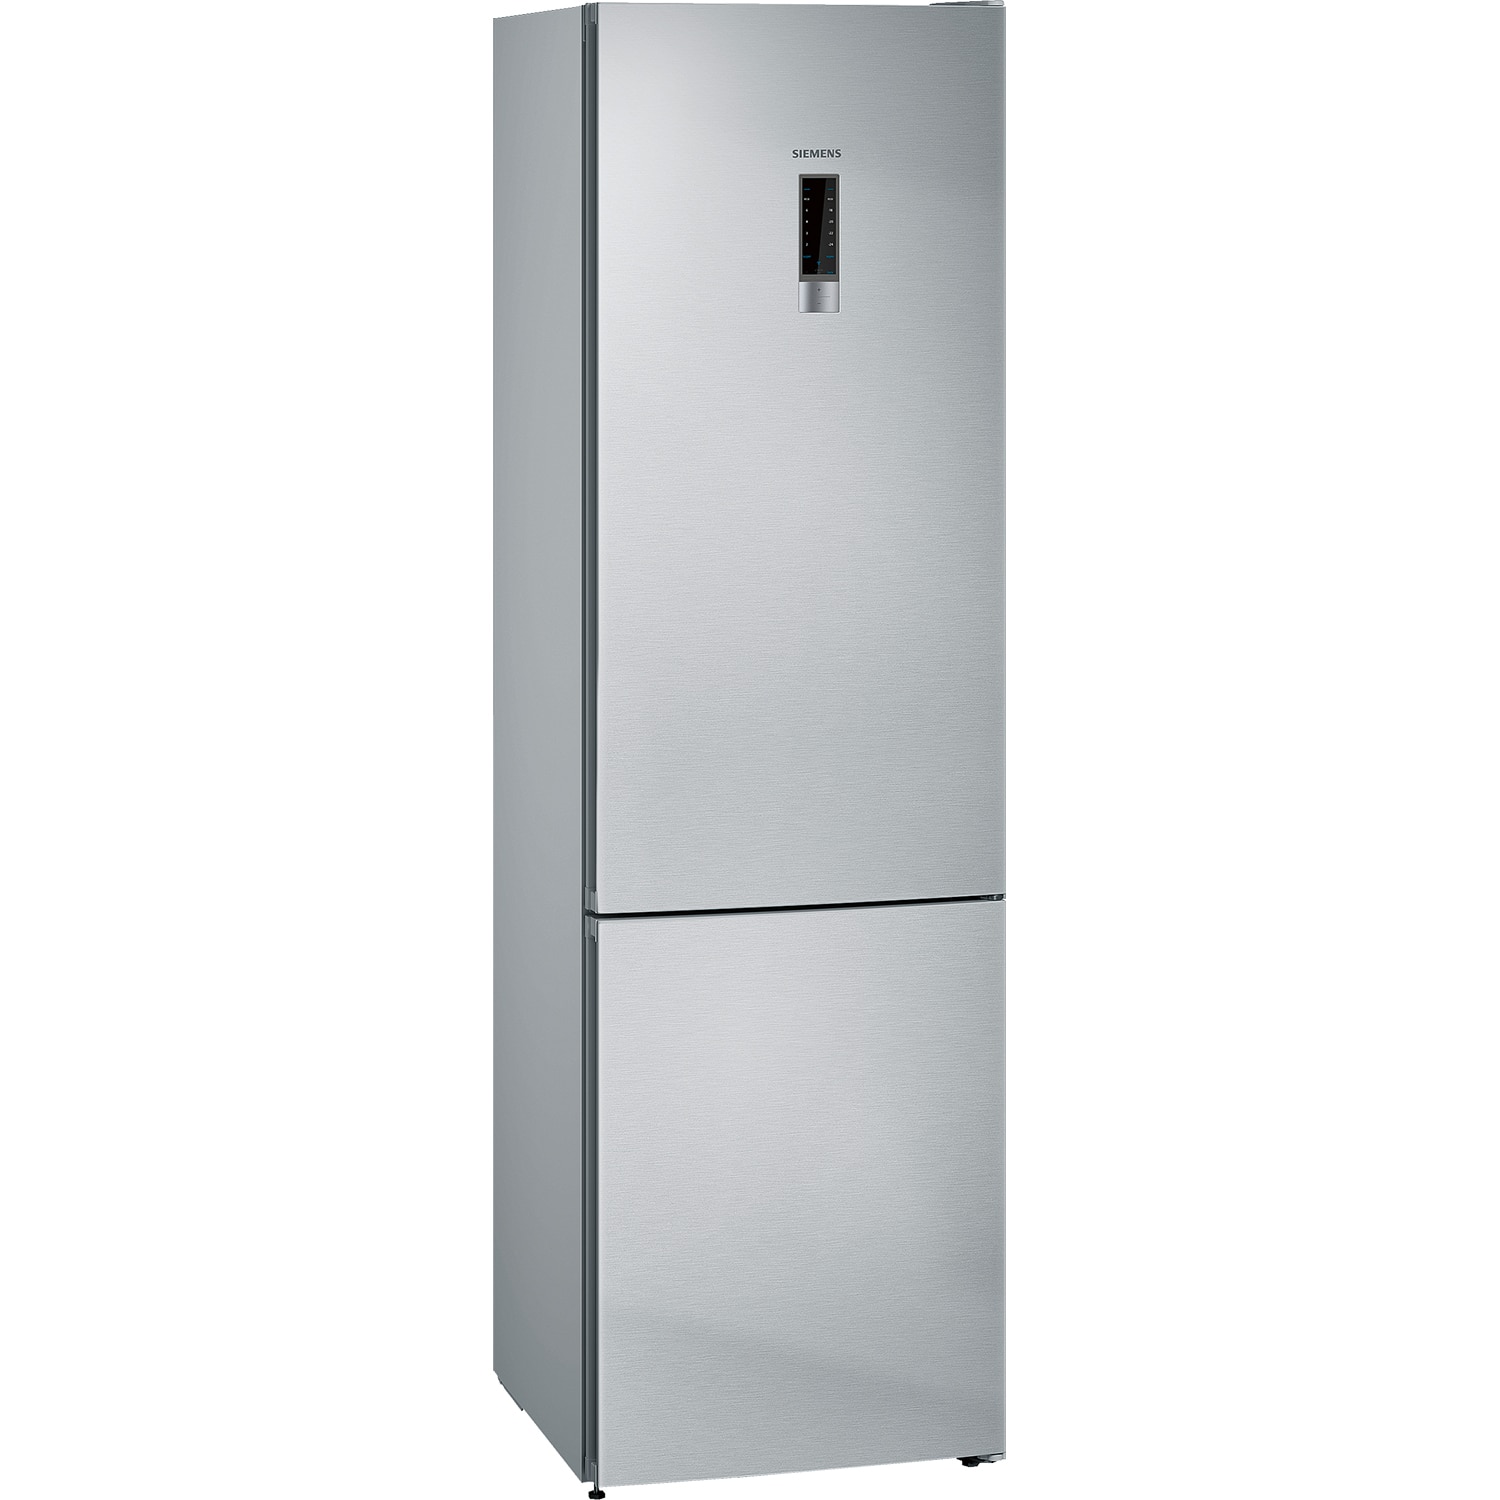 Хладилник Bosch KG39NXI35 с обем от 366 л.